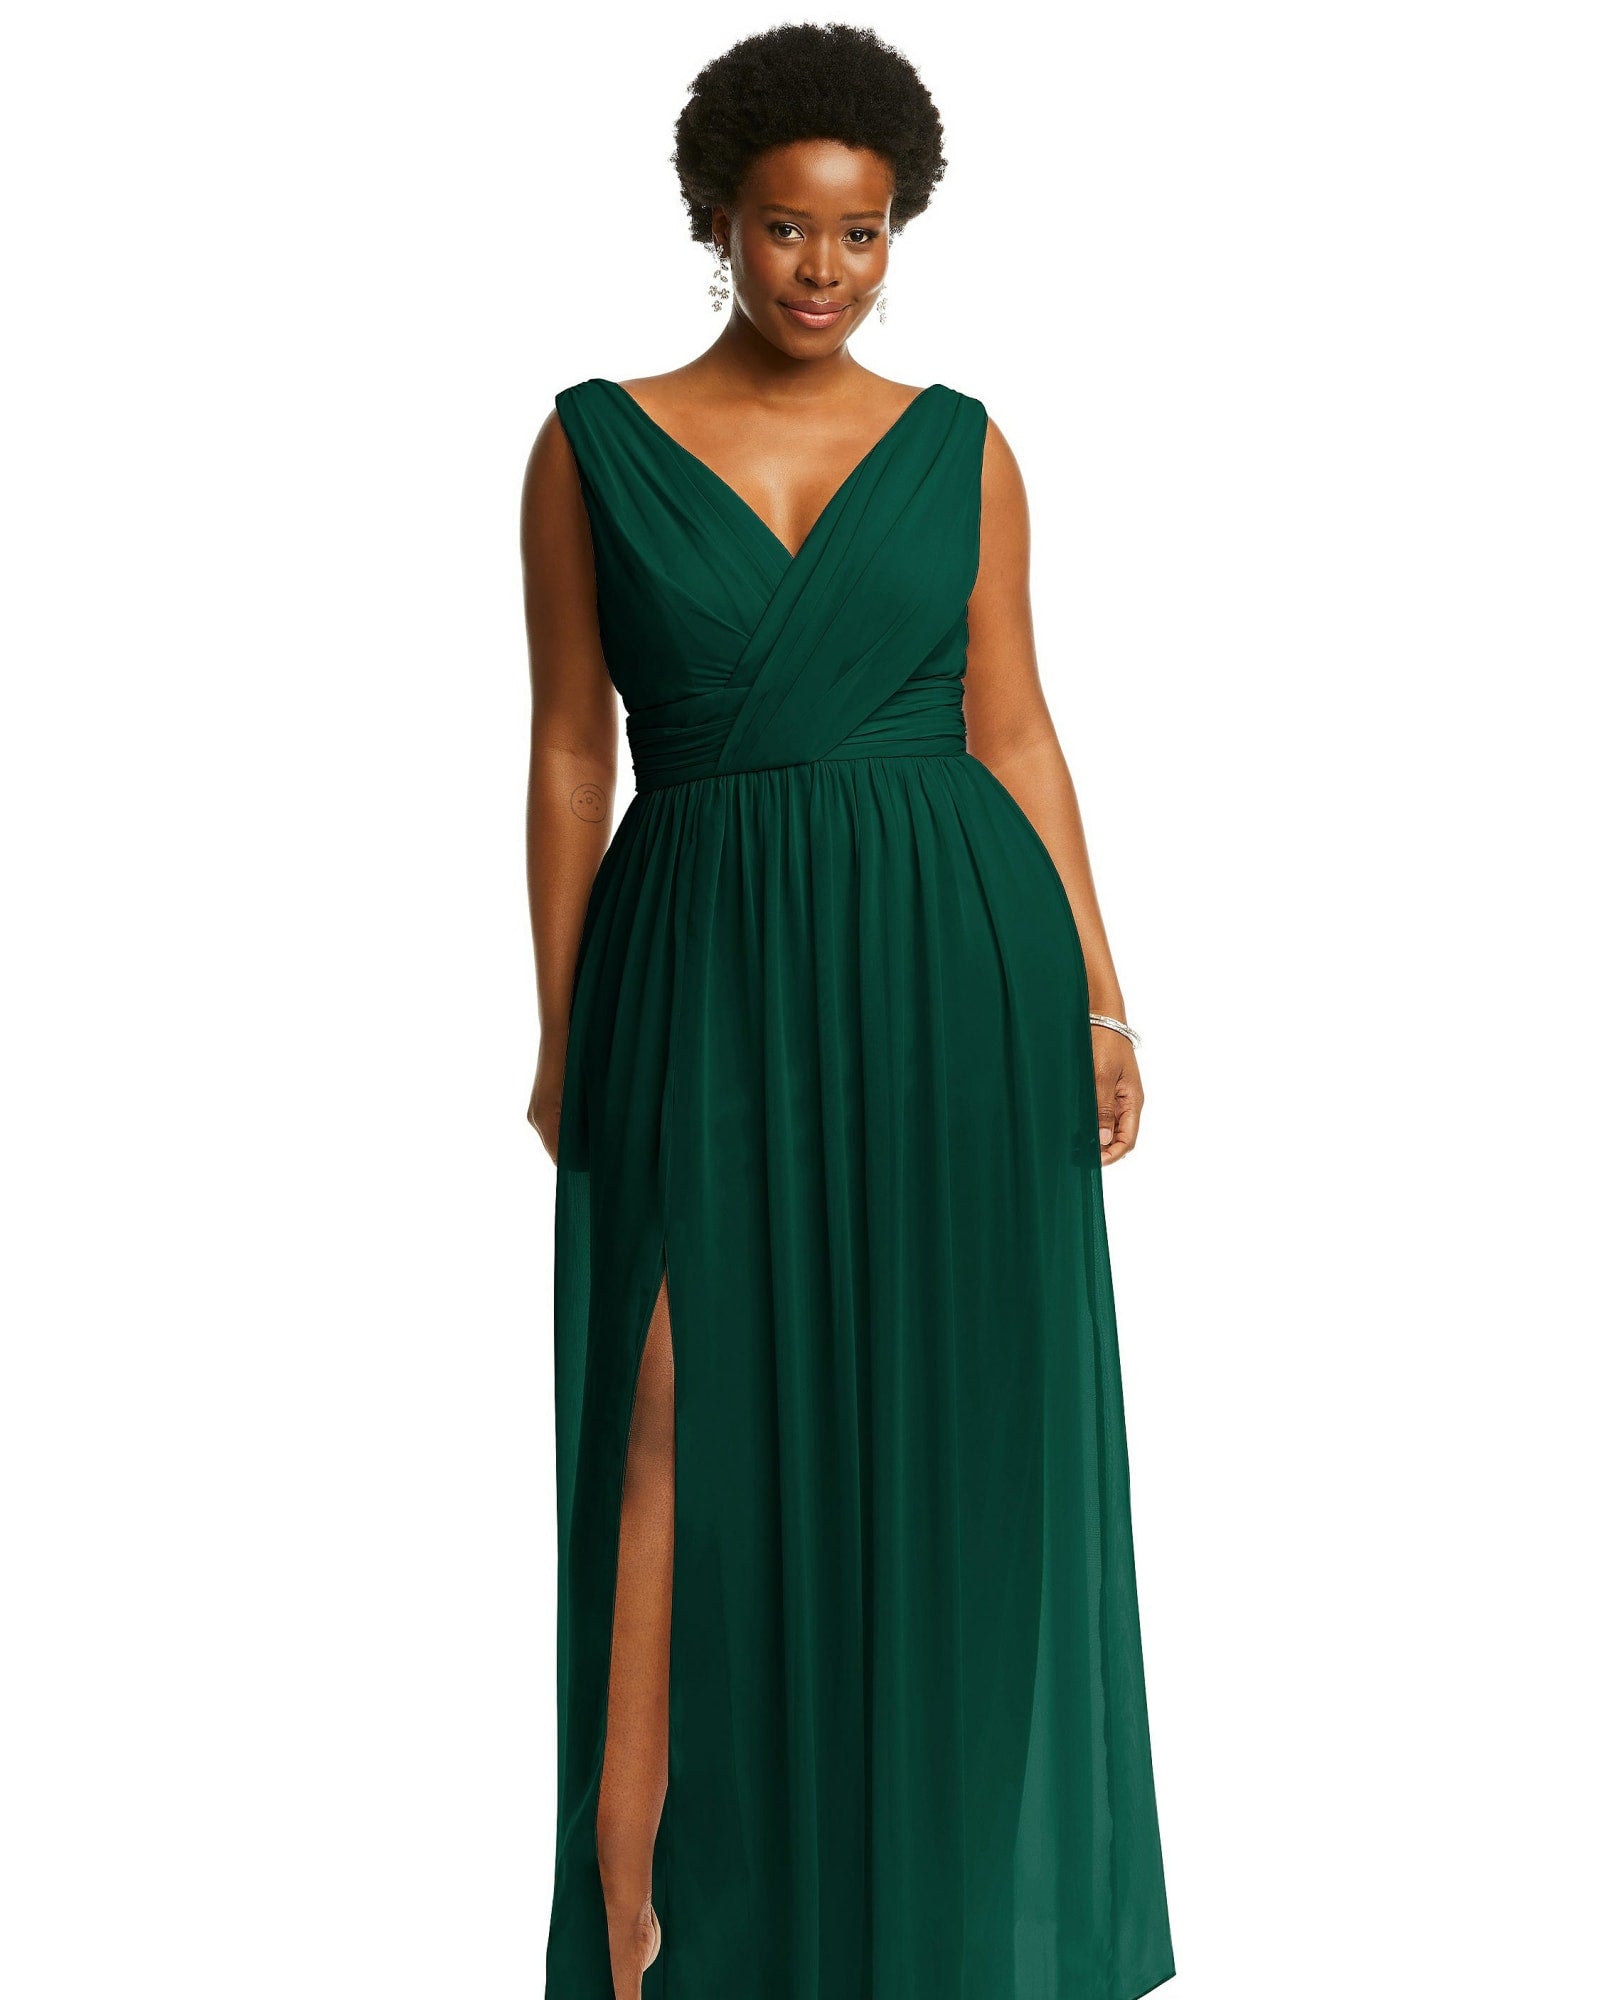 Plus Size Hunter Green Formal Dress